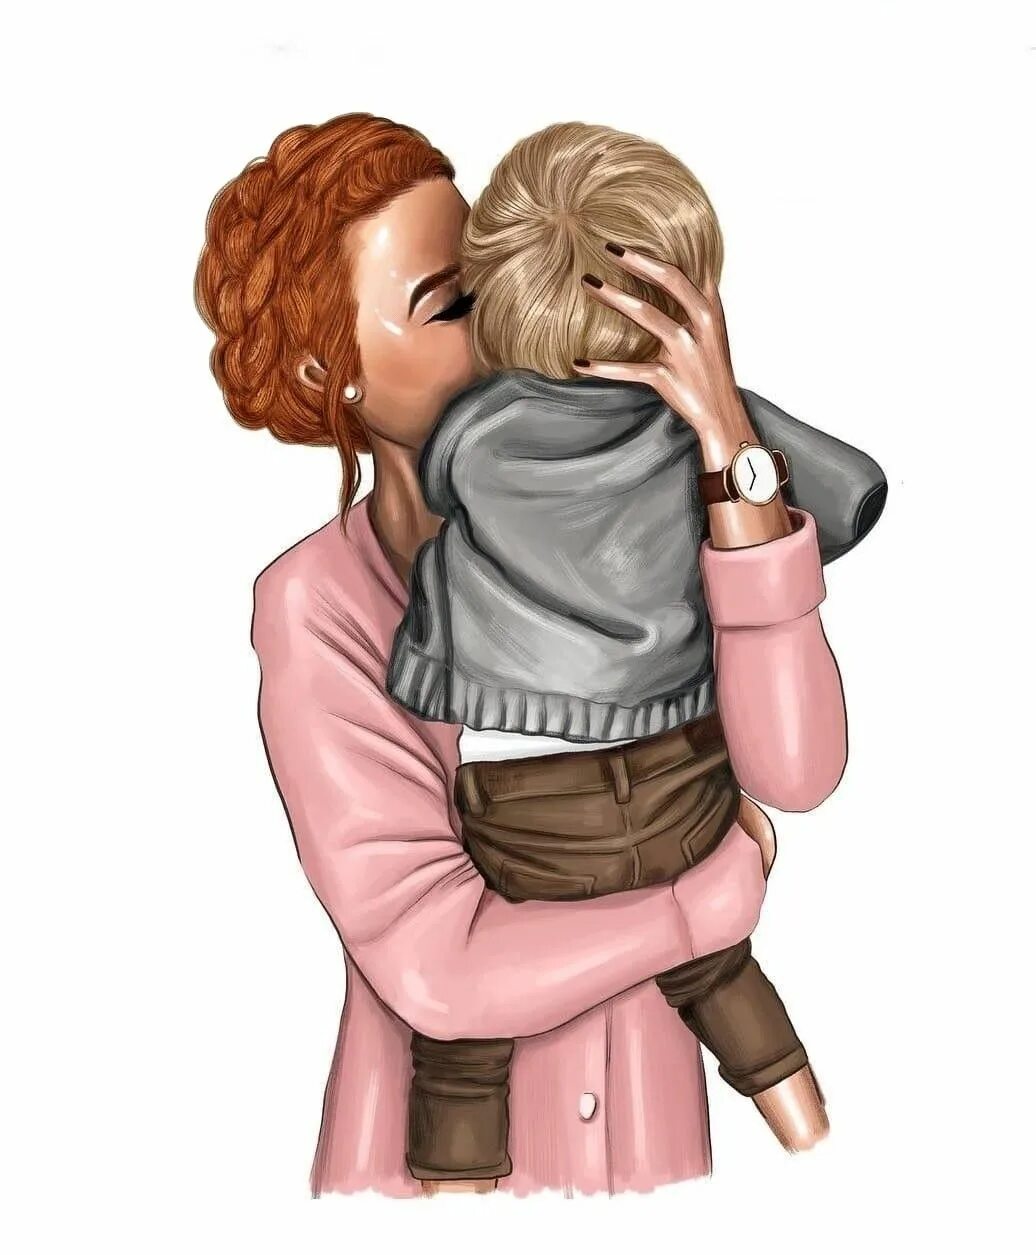 Мама обнимает ребенка арт. Мать арт объятия. Мать с ребёнком на руках арт.